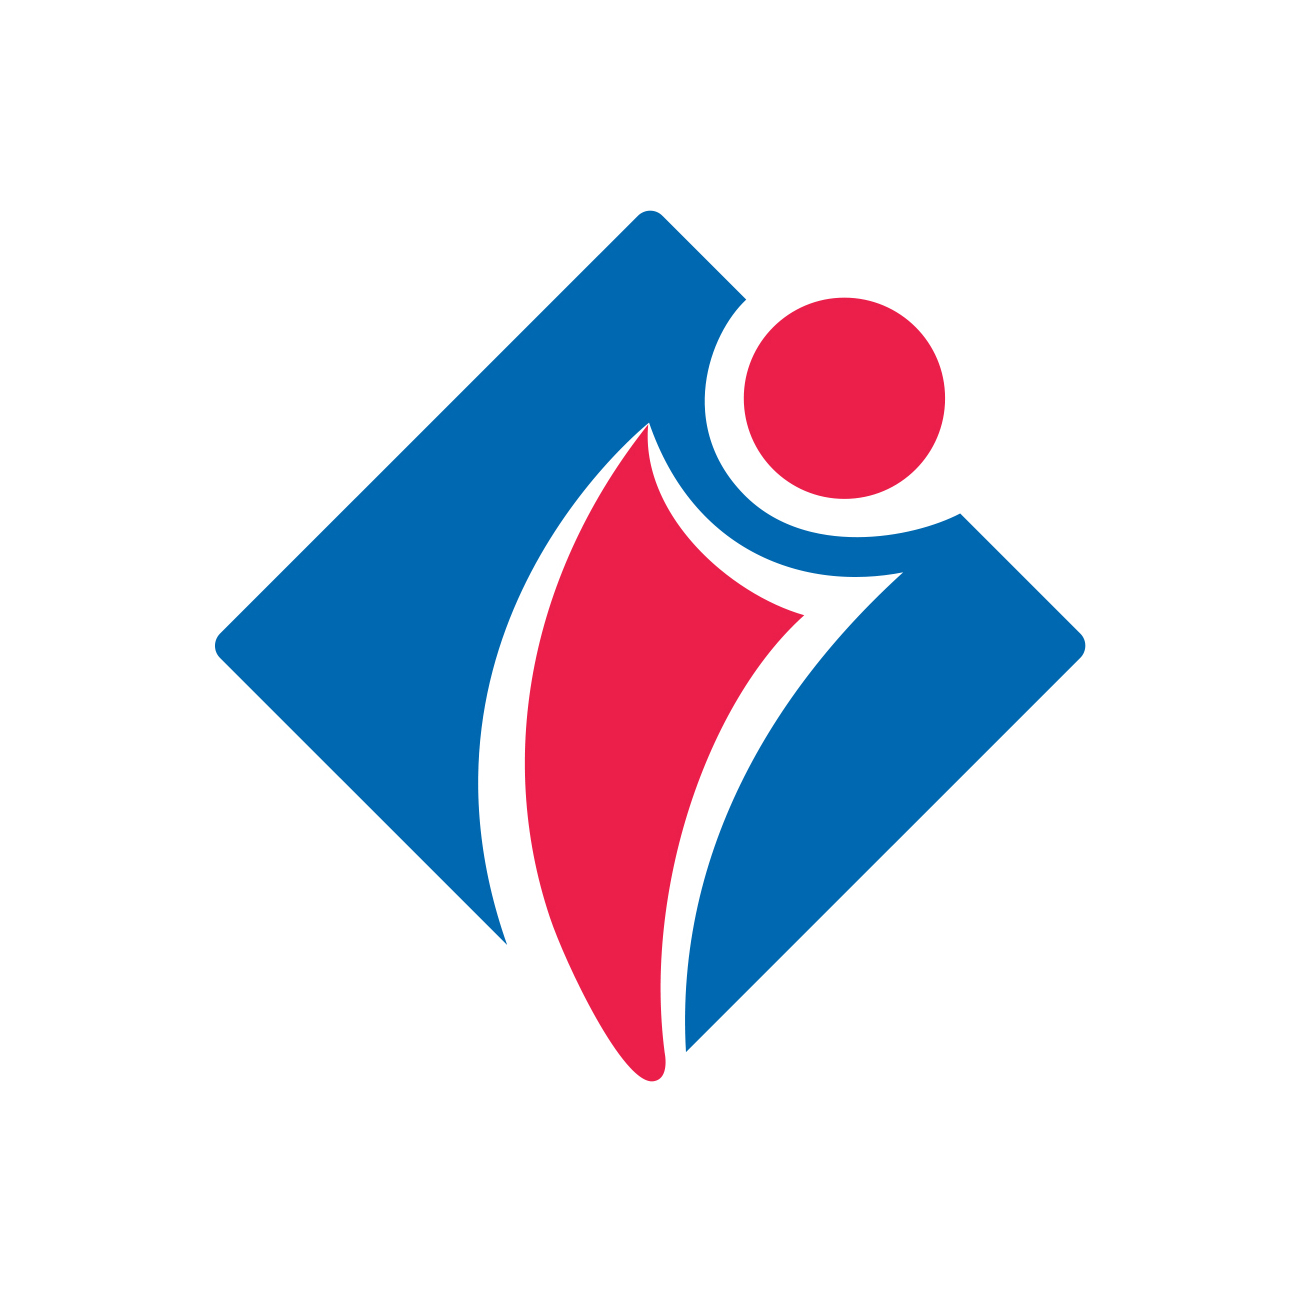 logo-office-de-tourisme